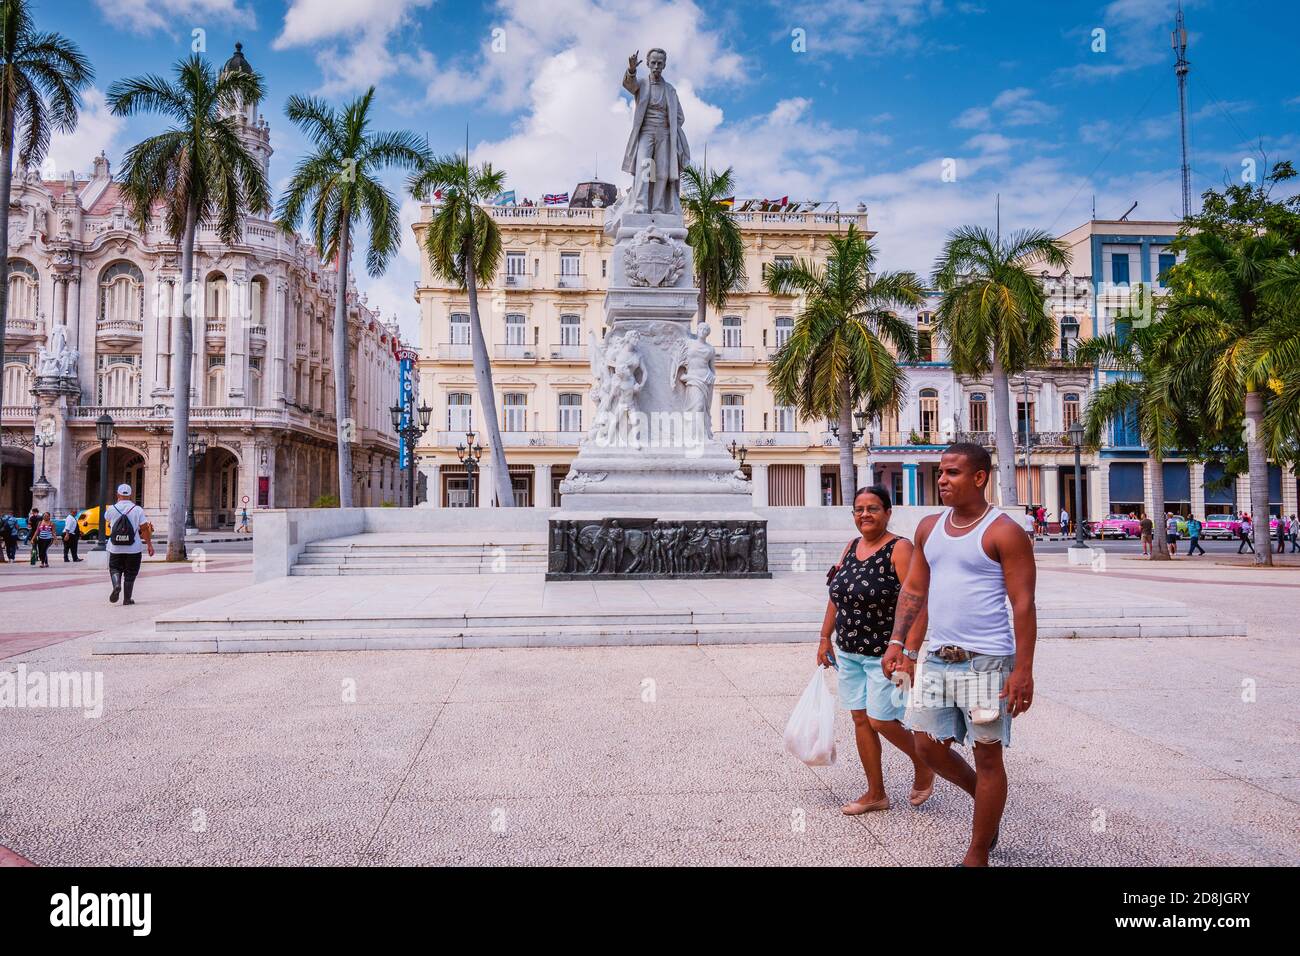 Statue of José Martí, Parque central. La Habana - La Havana, Cuba, Latin America and the Caribbean Stock Photo